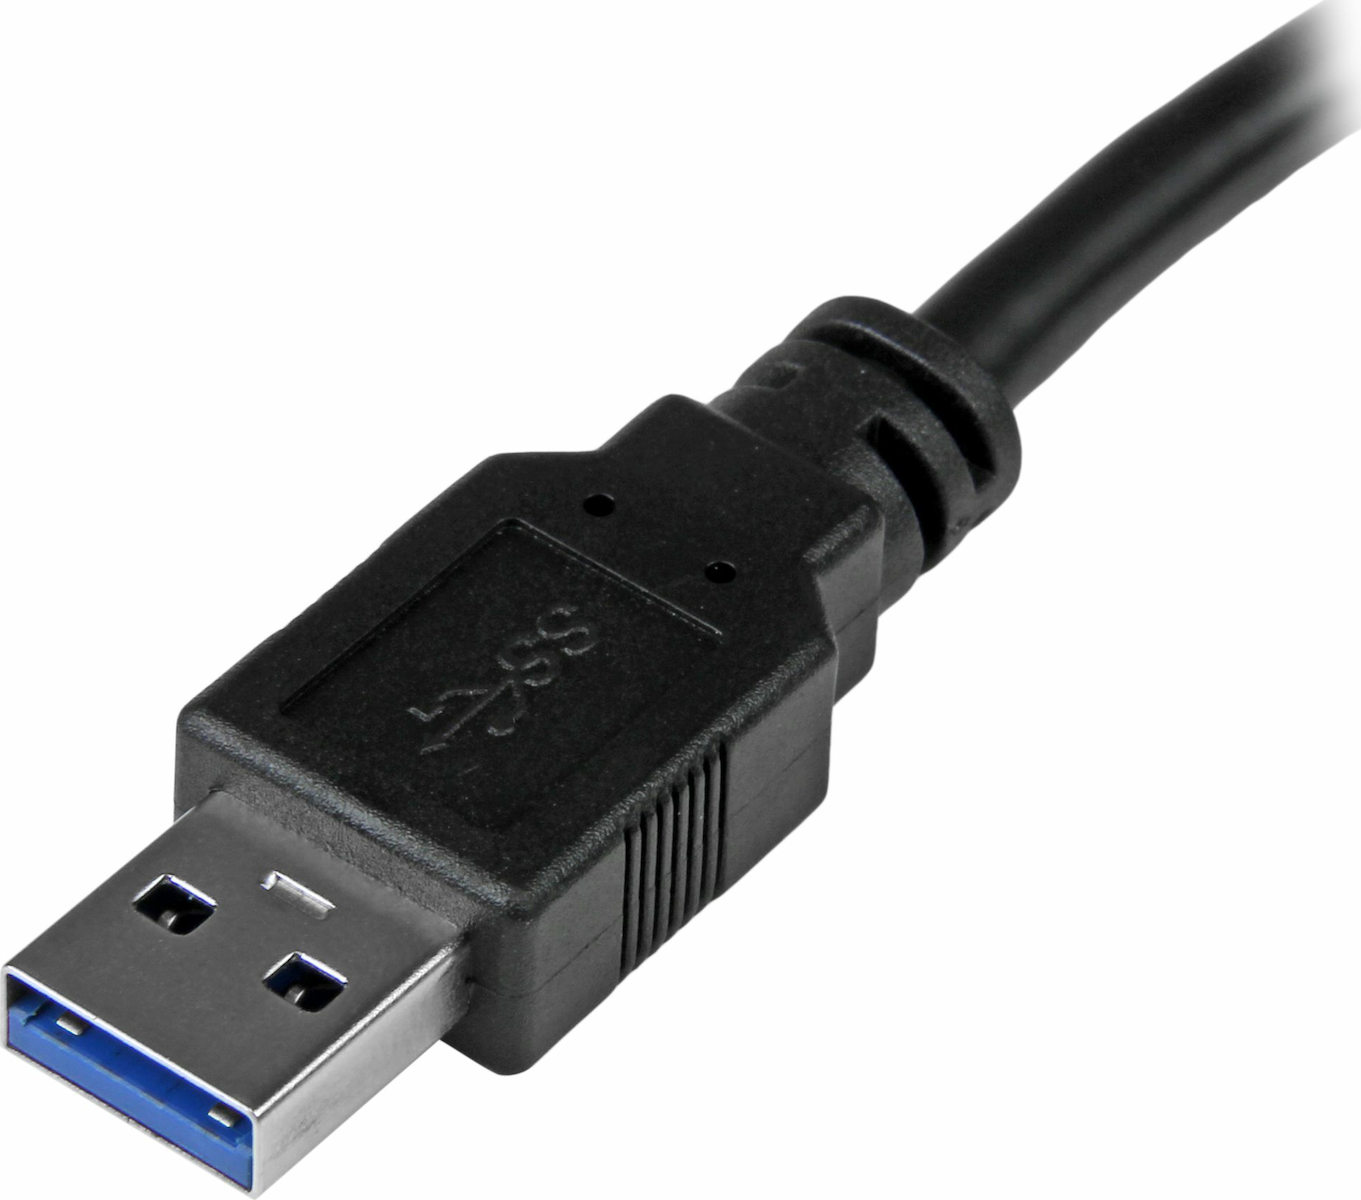 DIGITUS B2B Shop  USB 2.0 - câble adaptateur IDE/SATA